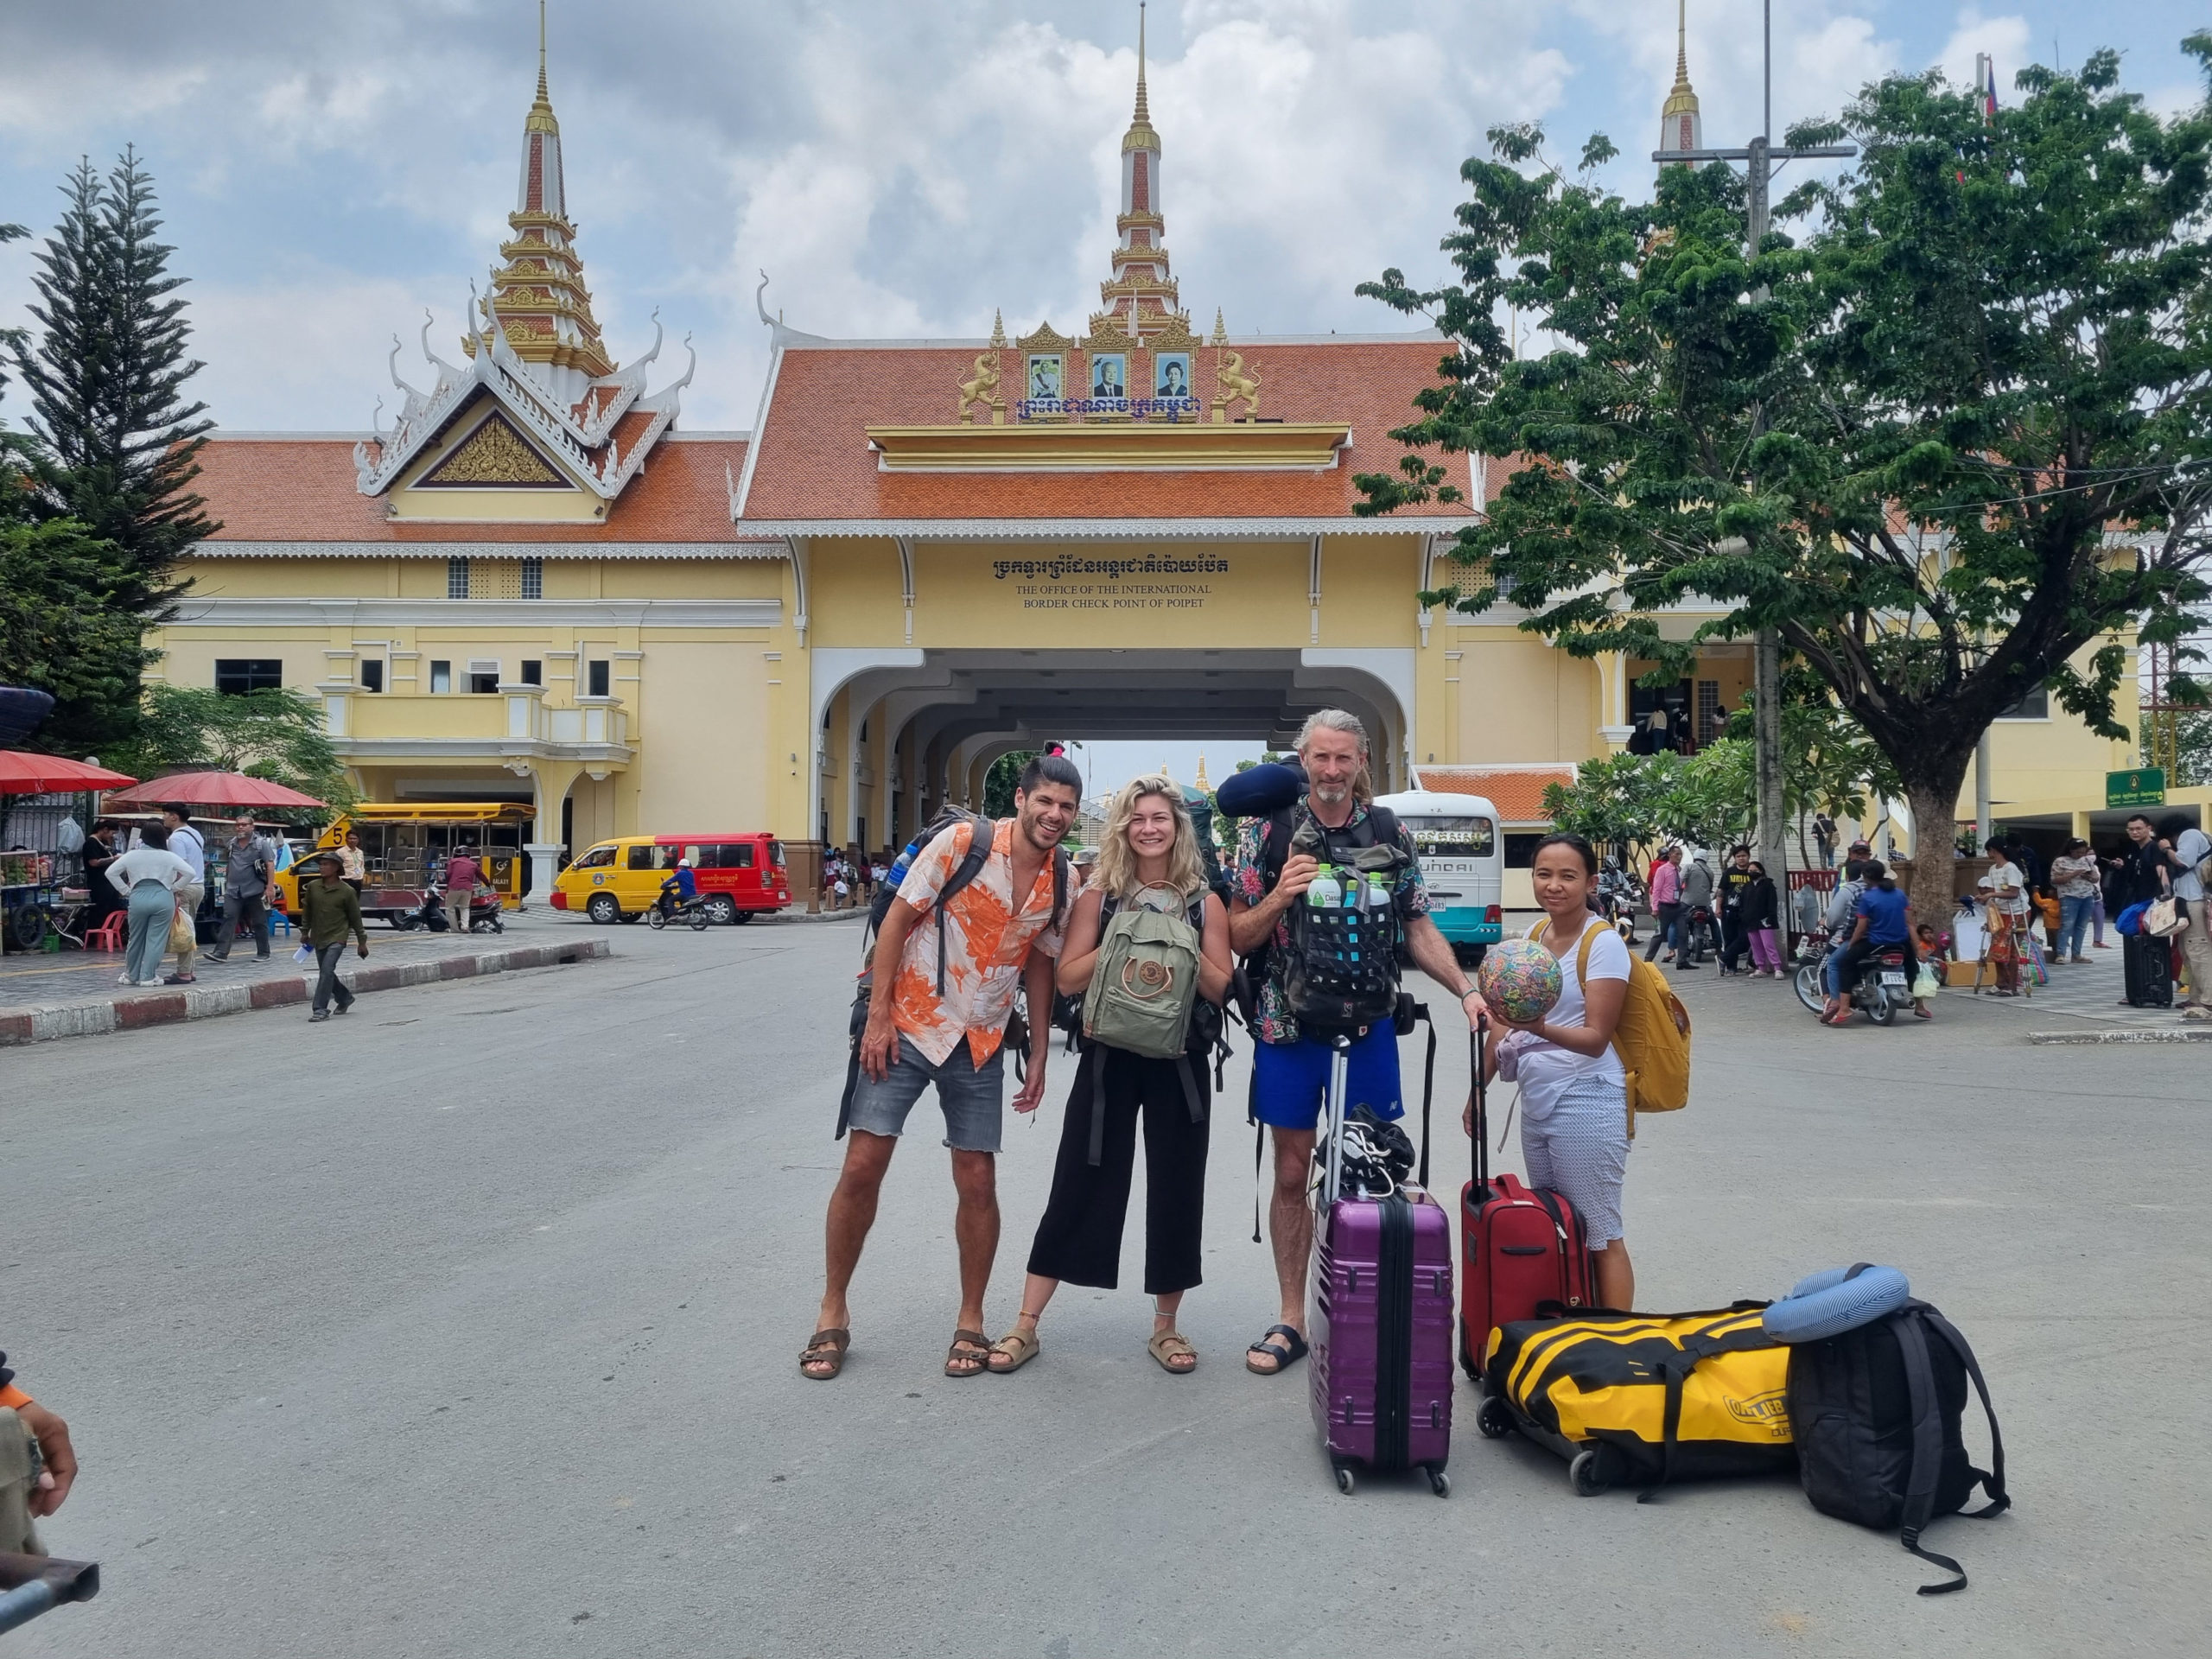 At the Cambodia-Thailand border